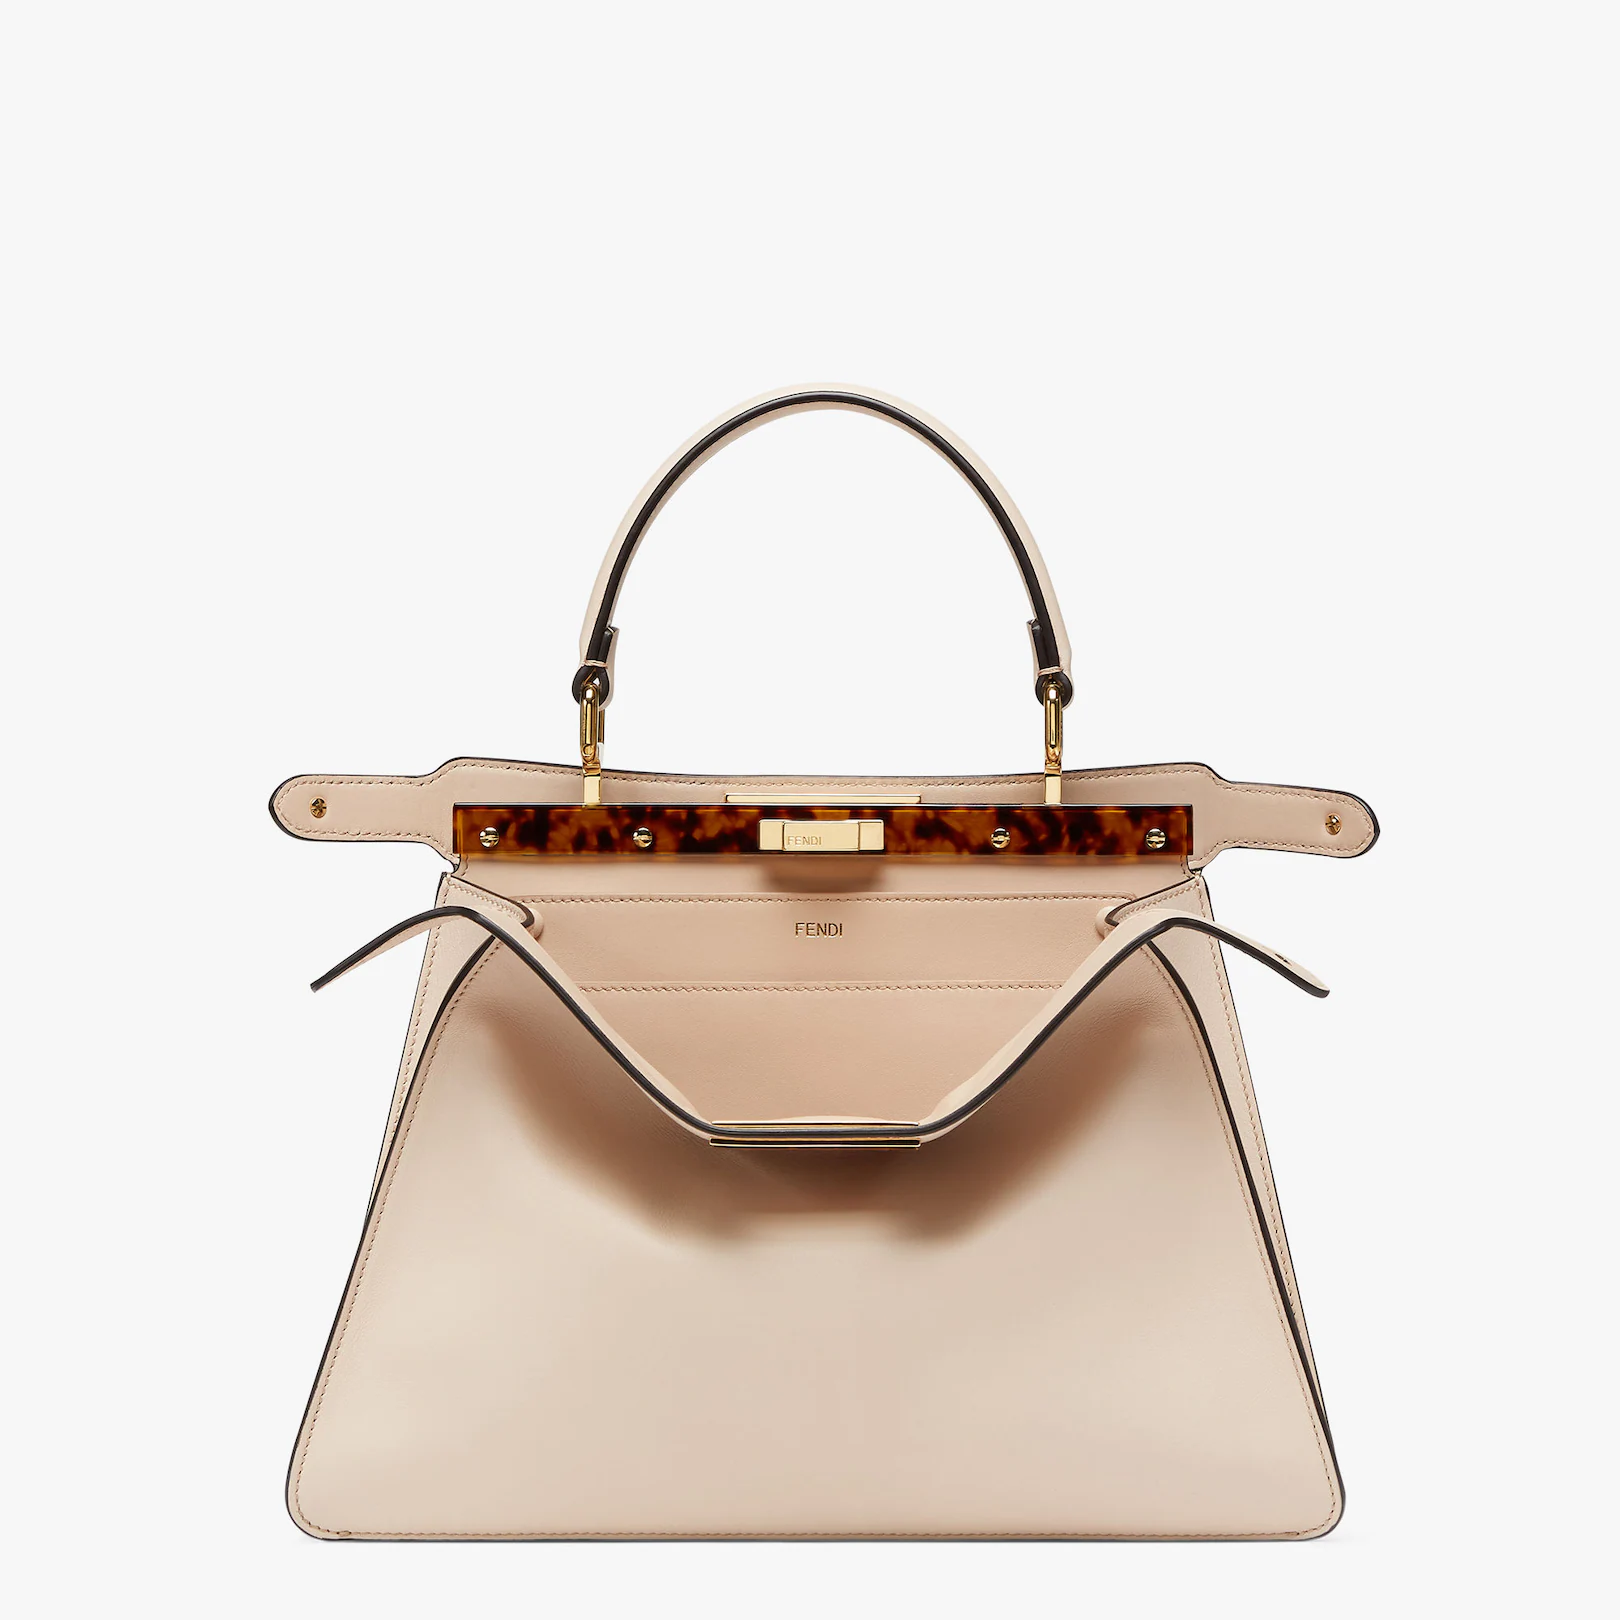 10 Most Popular Fendi Handbags